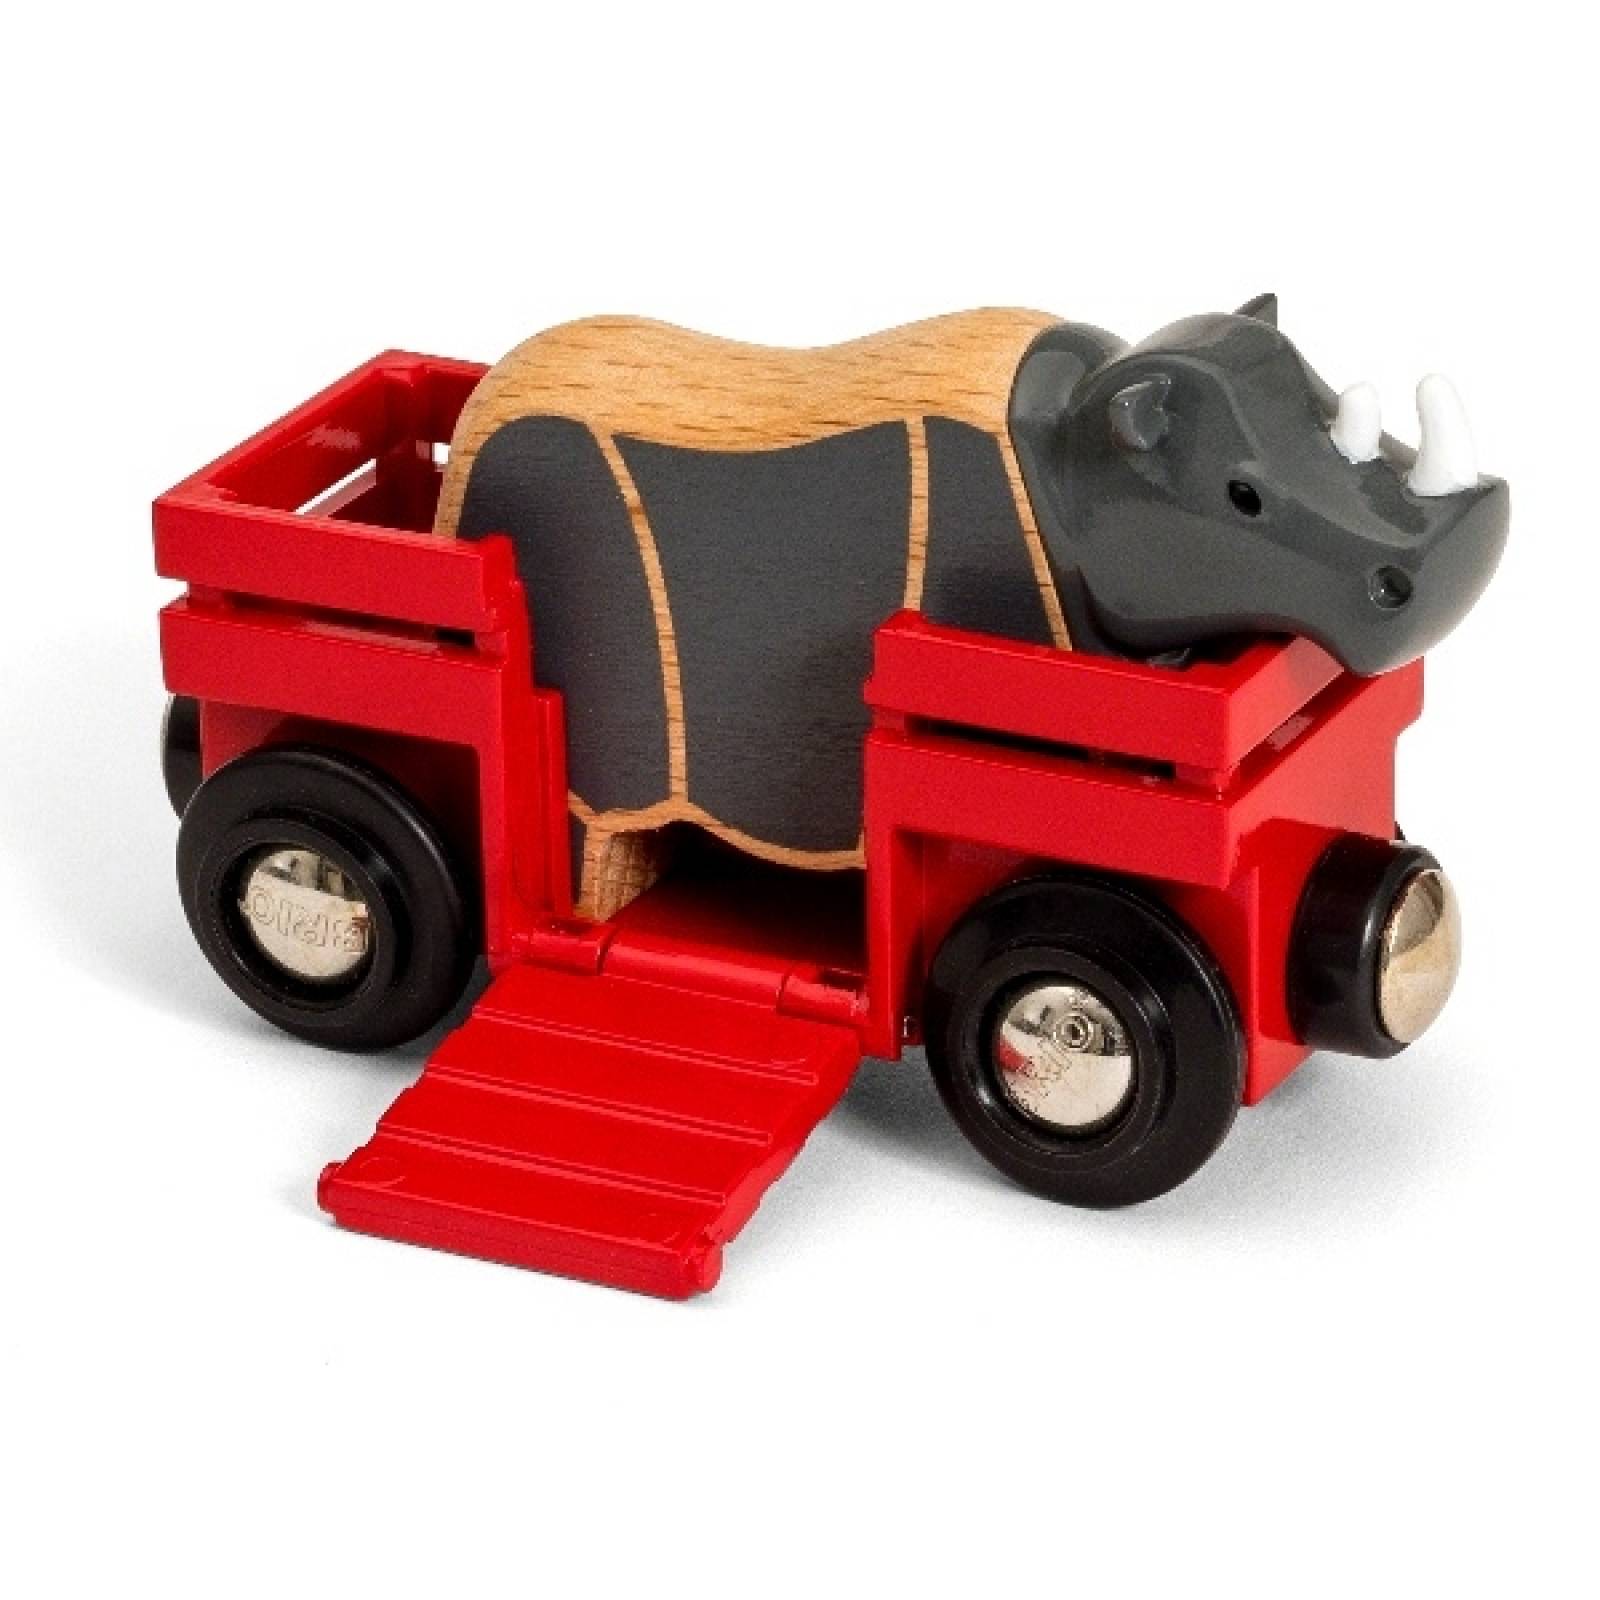 Rhino & Wagon BRIO Wooden Railway Age 3+ thumbnails